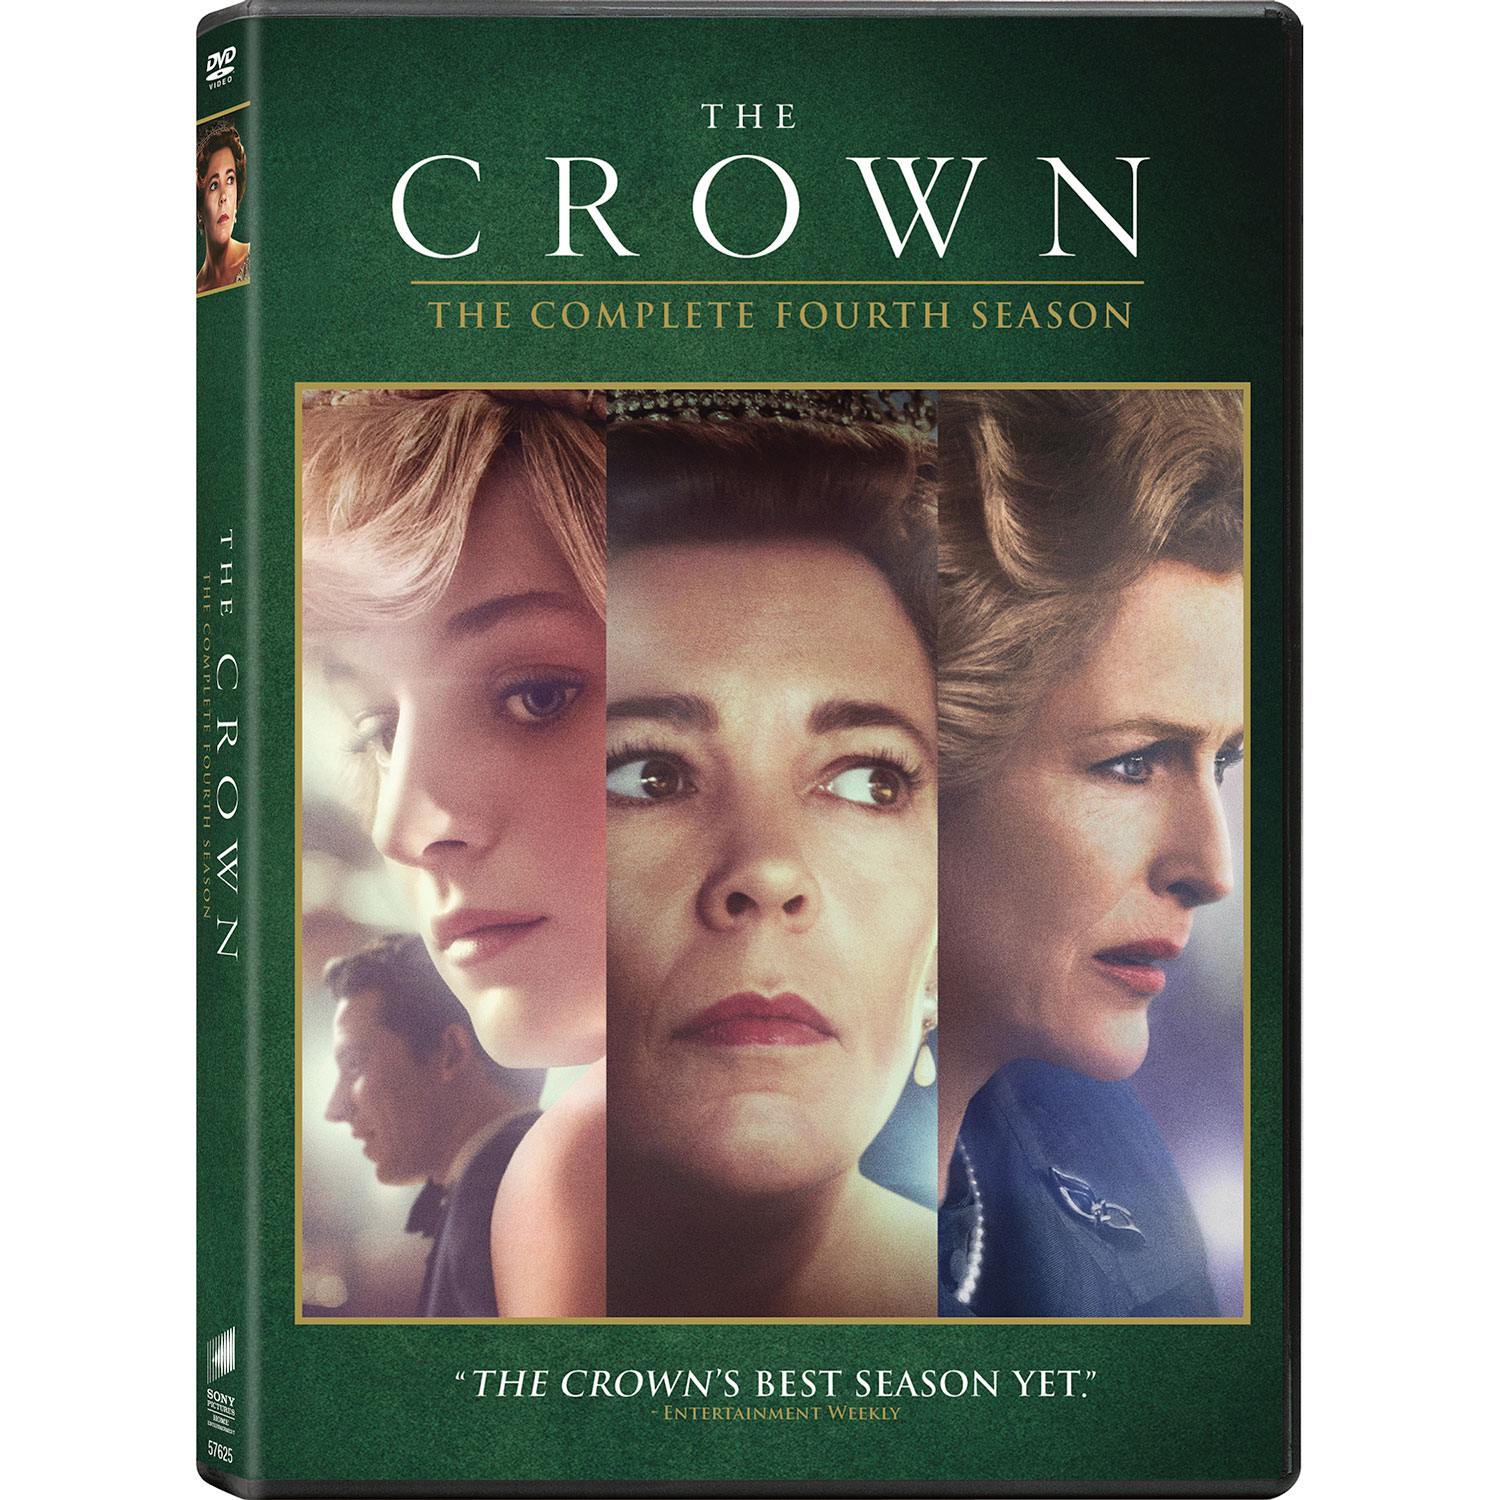 Jewels on Film: THE CROWN (Season 2, Episode 8)